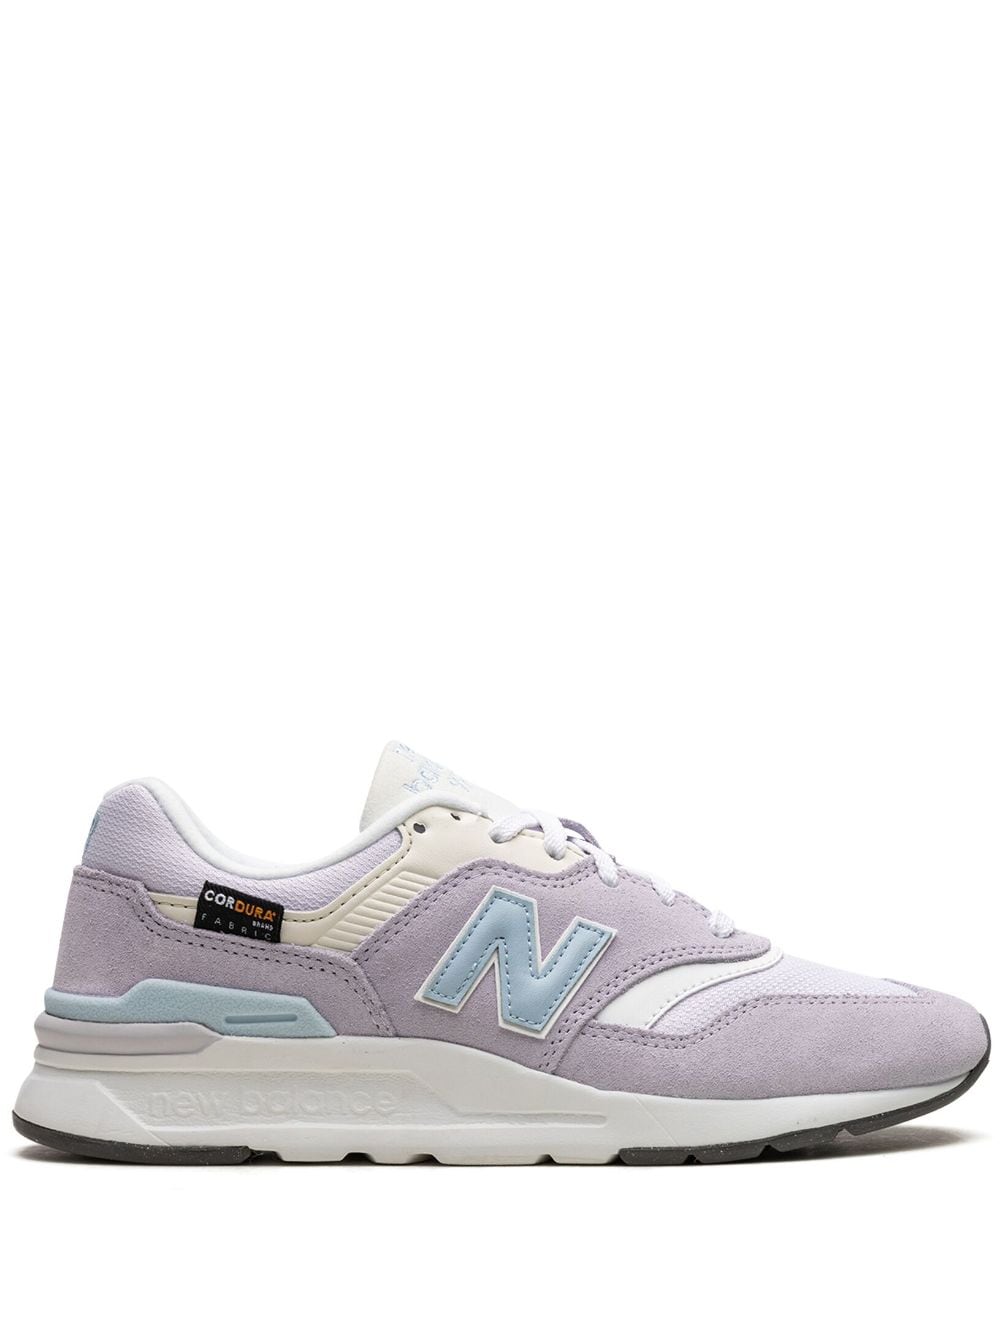 New Balance 997 "Lavender" sneakers - Purple